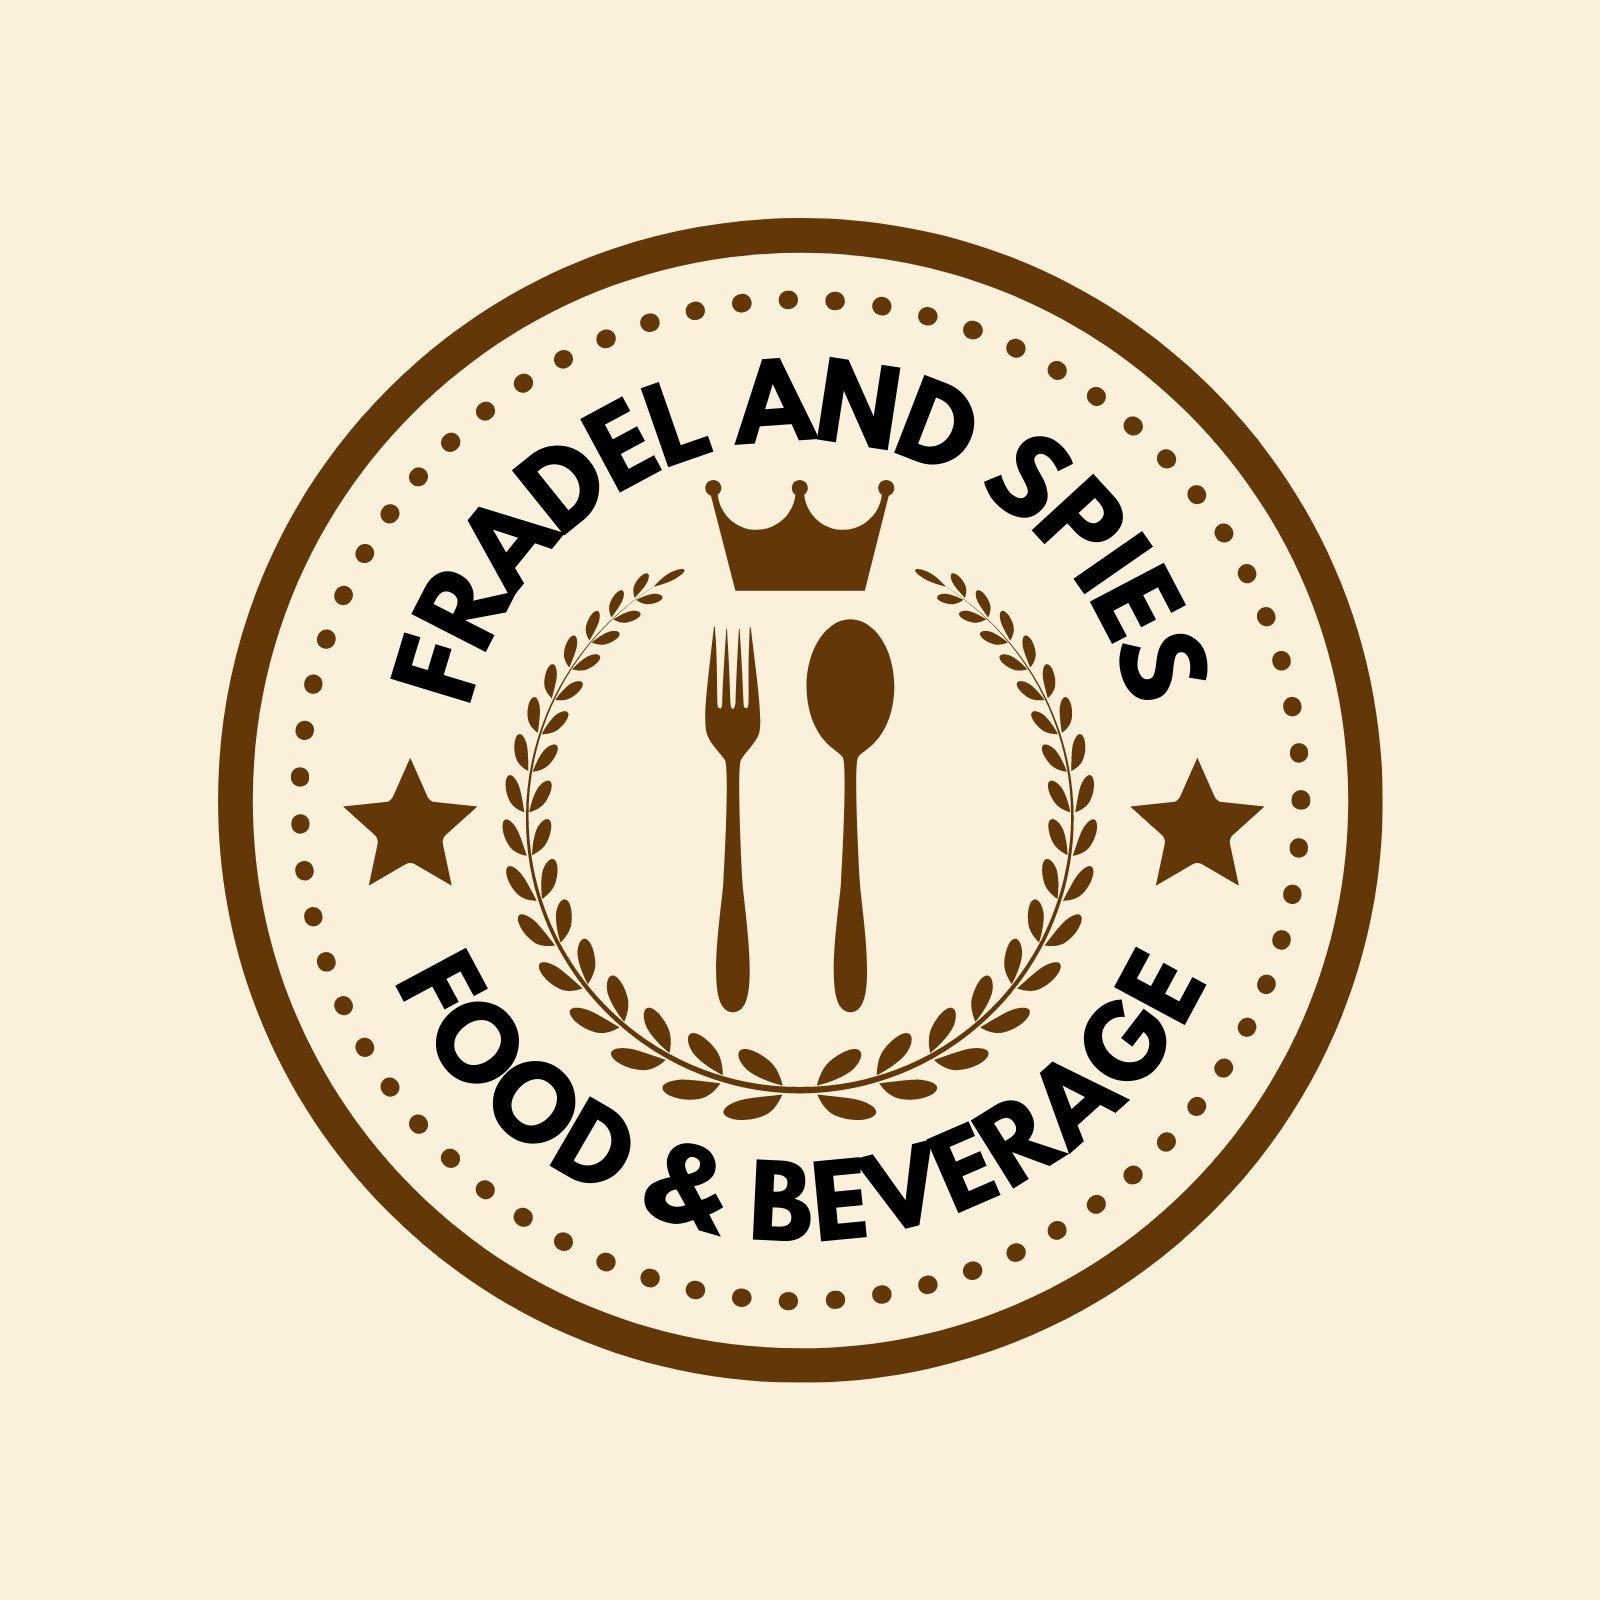 Conservative, Upmarket, Food Service Logo Design for Groupe Home Le Food &  Beverage réinventé en Suisse Romande by BlackAngle | Design #18721395